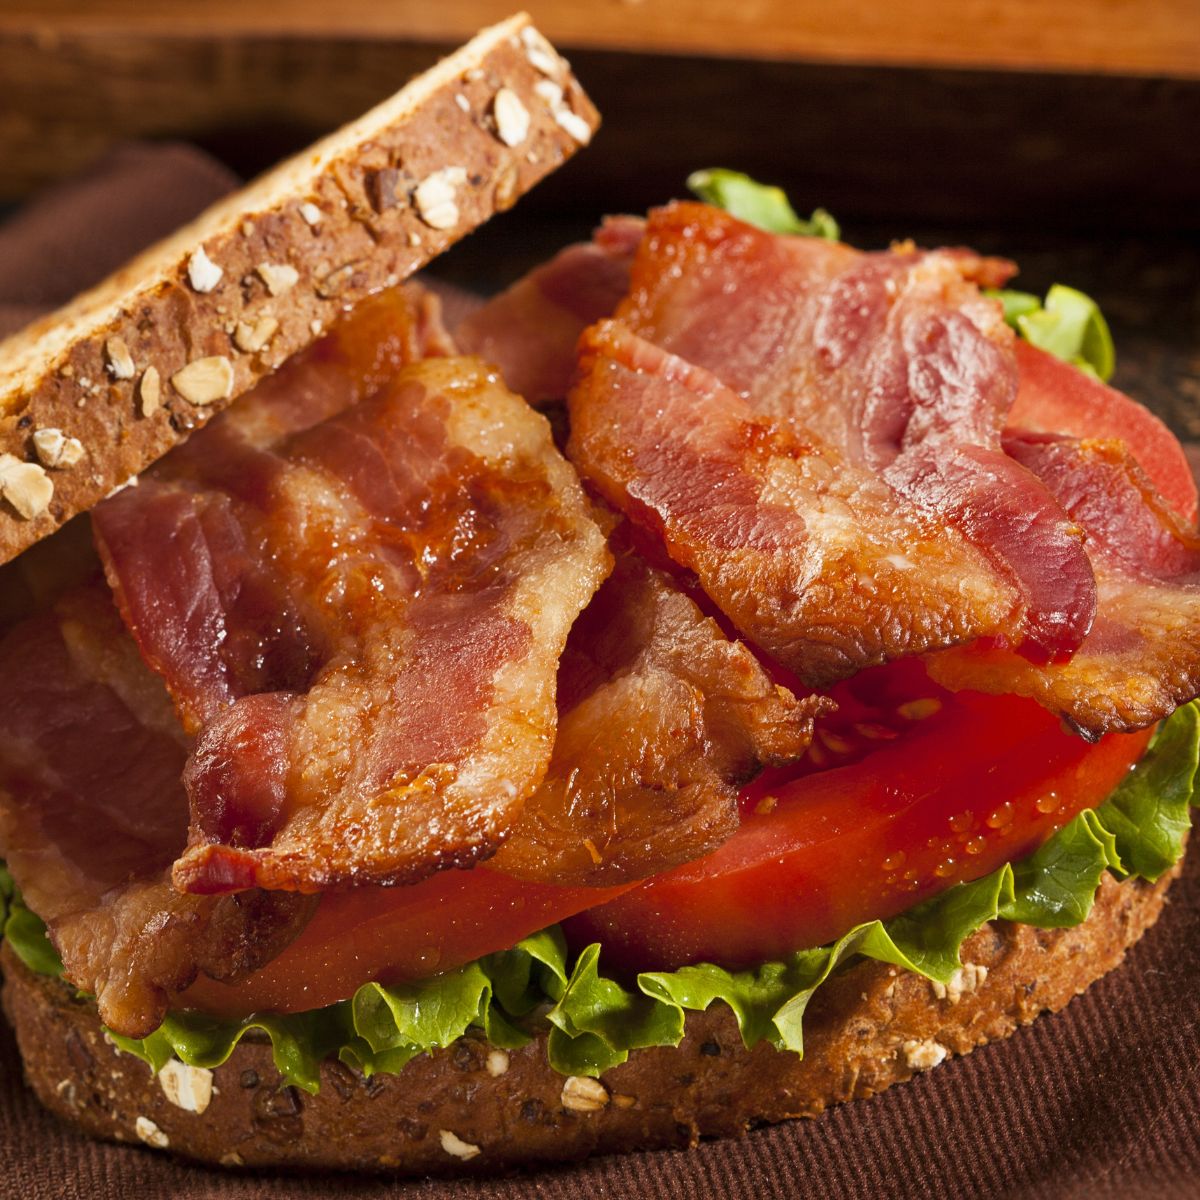 This is a closeup of a BLT sandwich.